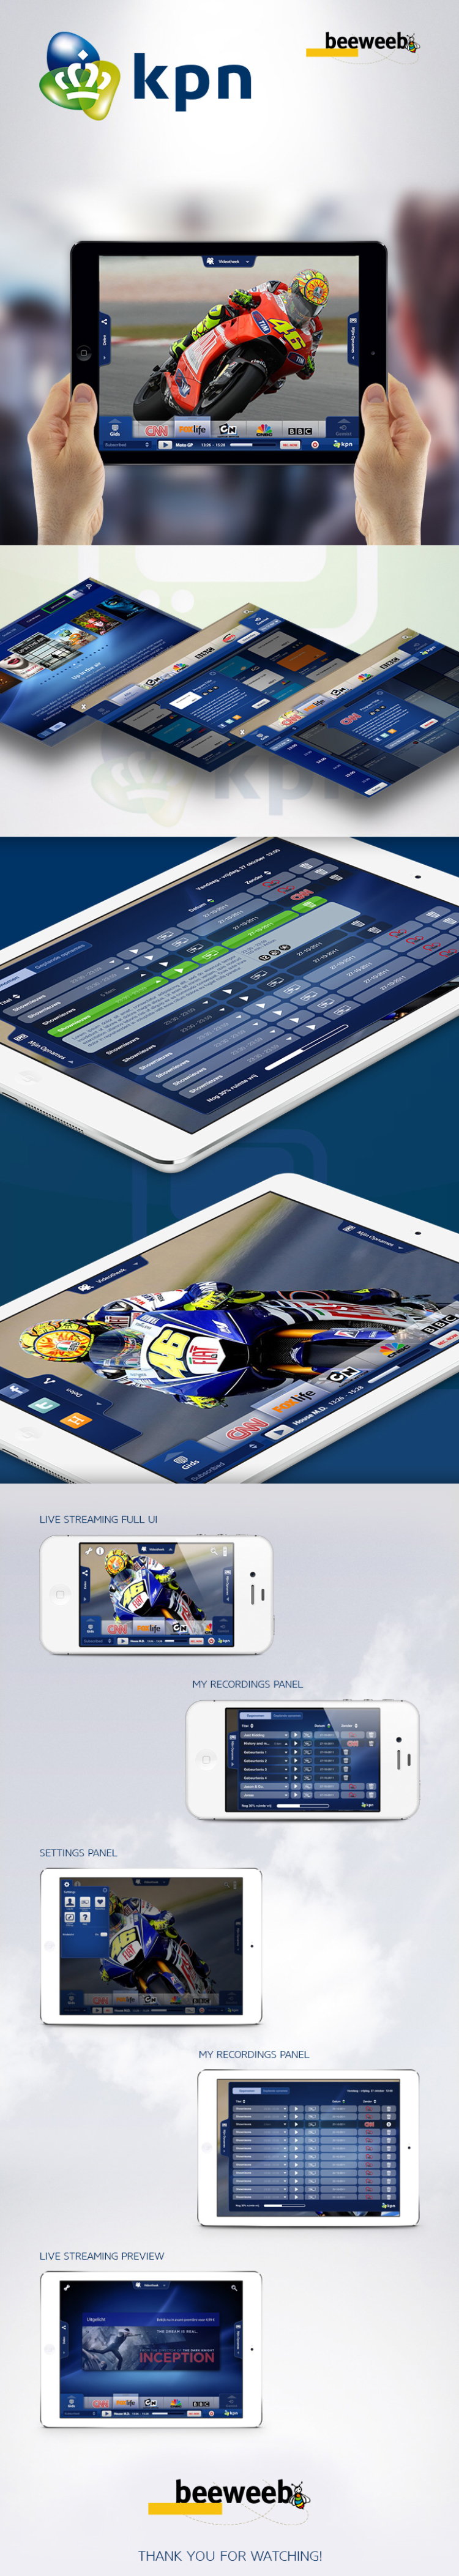 KPN mobile tv multiscreen iPad iphone beeweeb android smartphone tablet operator